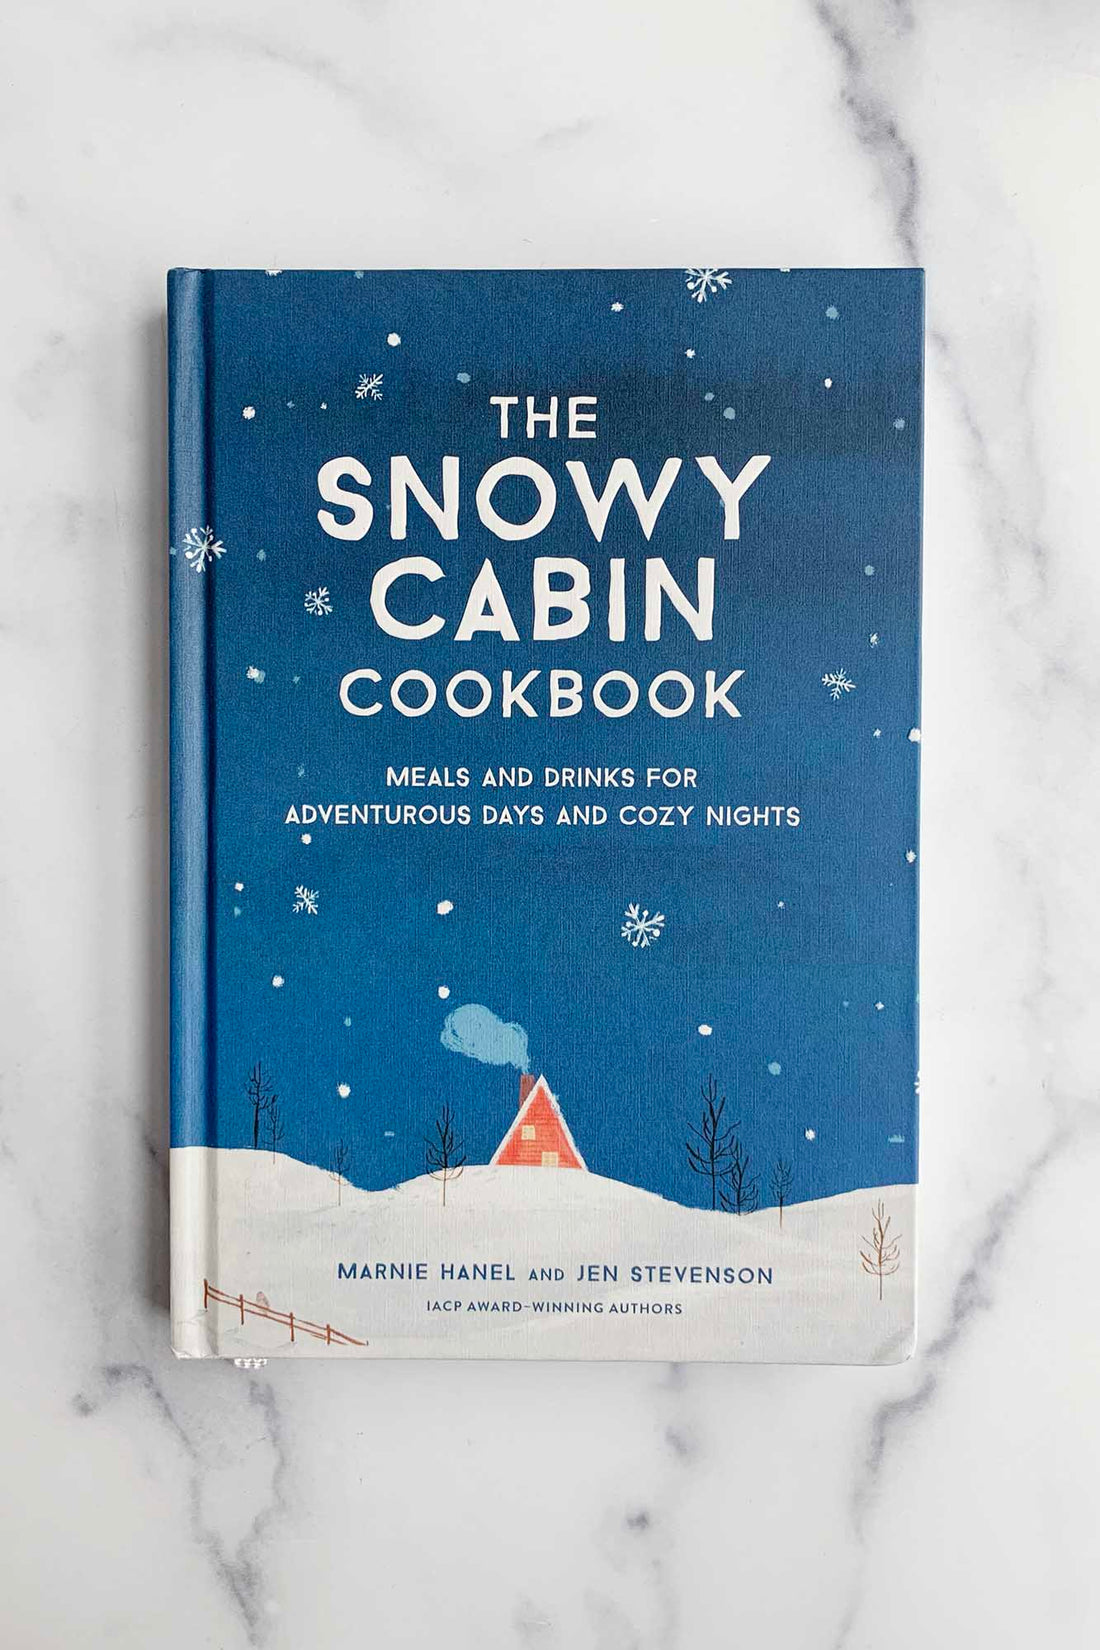 The Snowy Cabin Cookbook